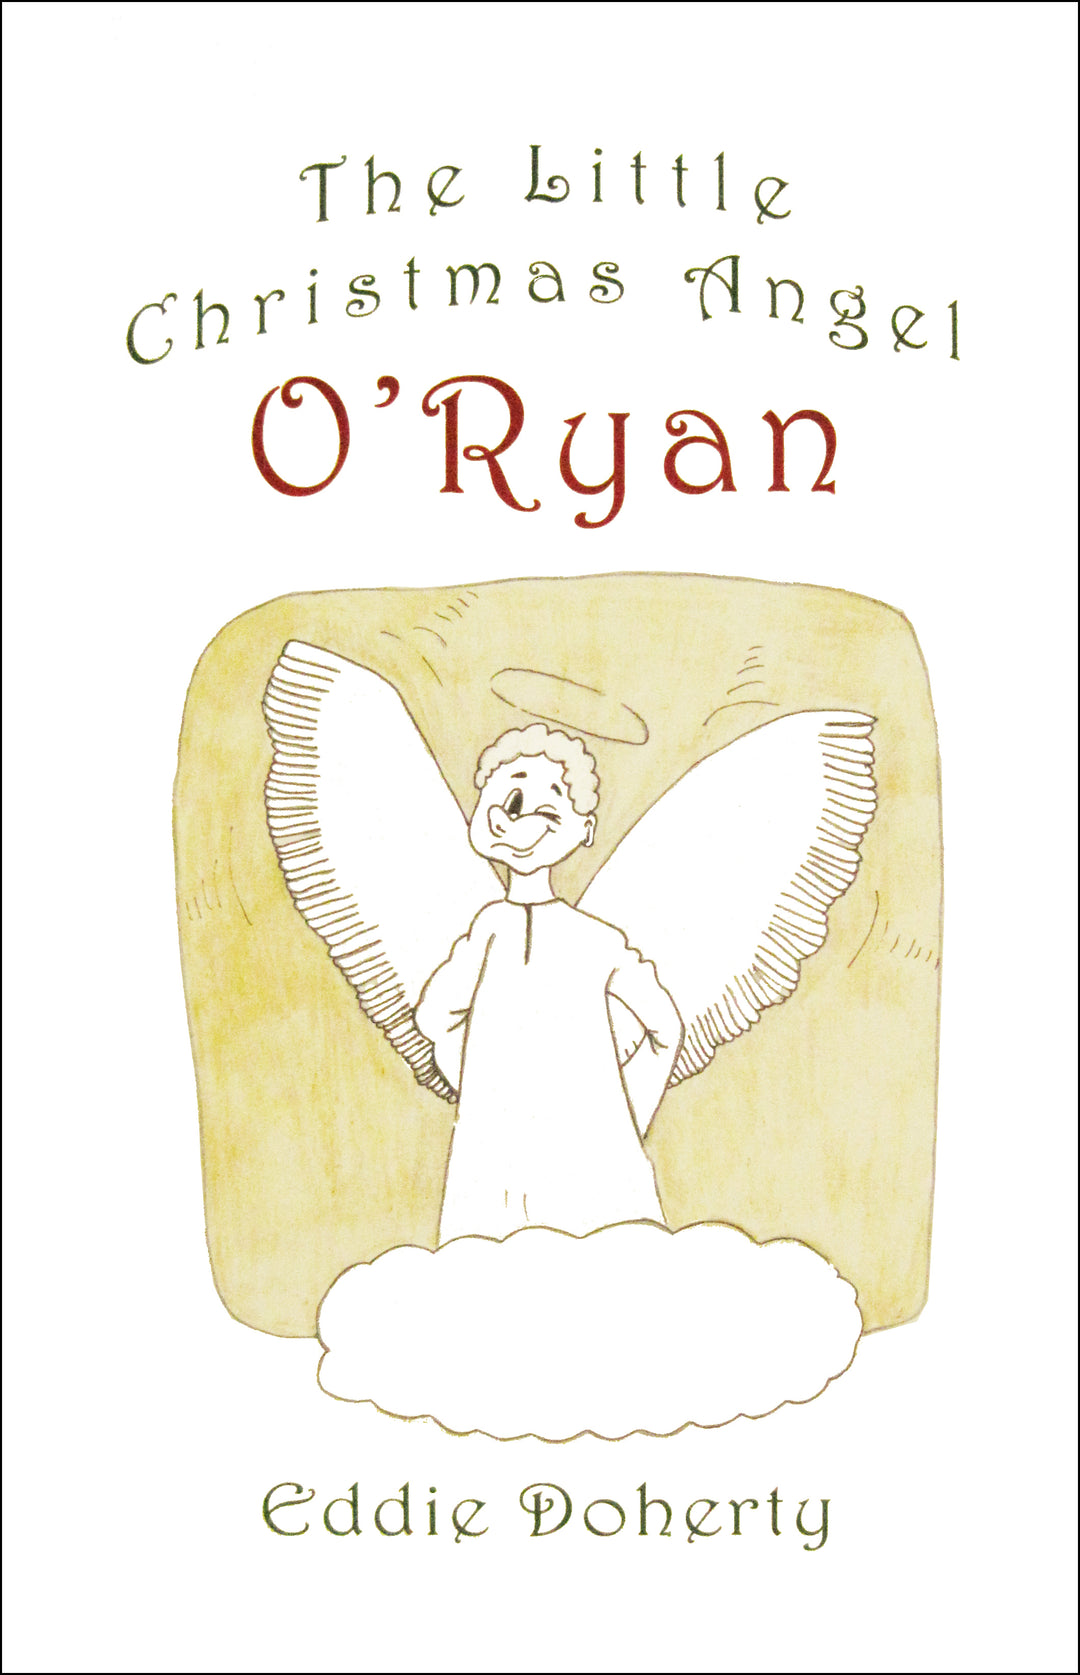 The Little Christmas Angel O'Ryan